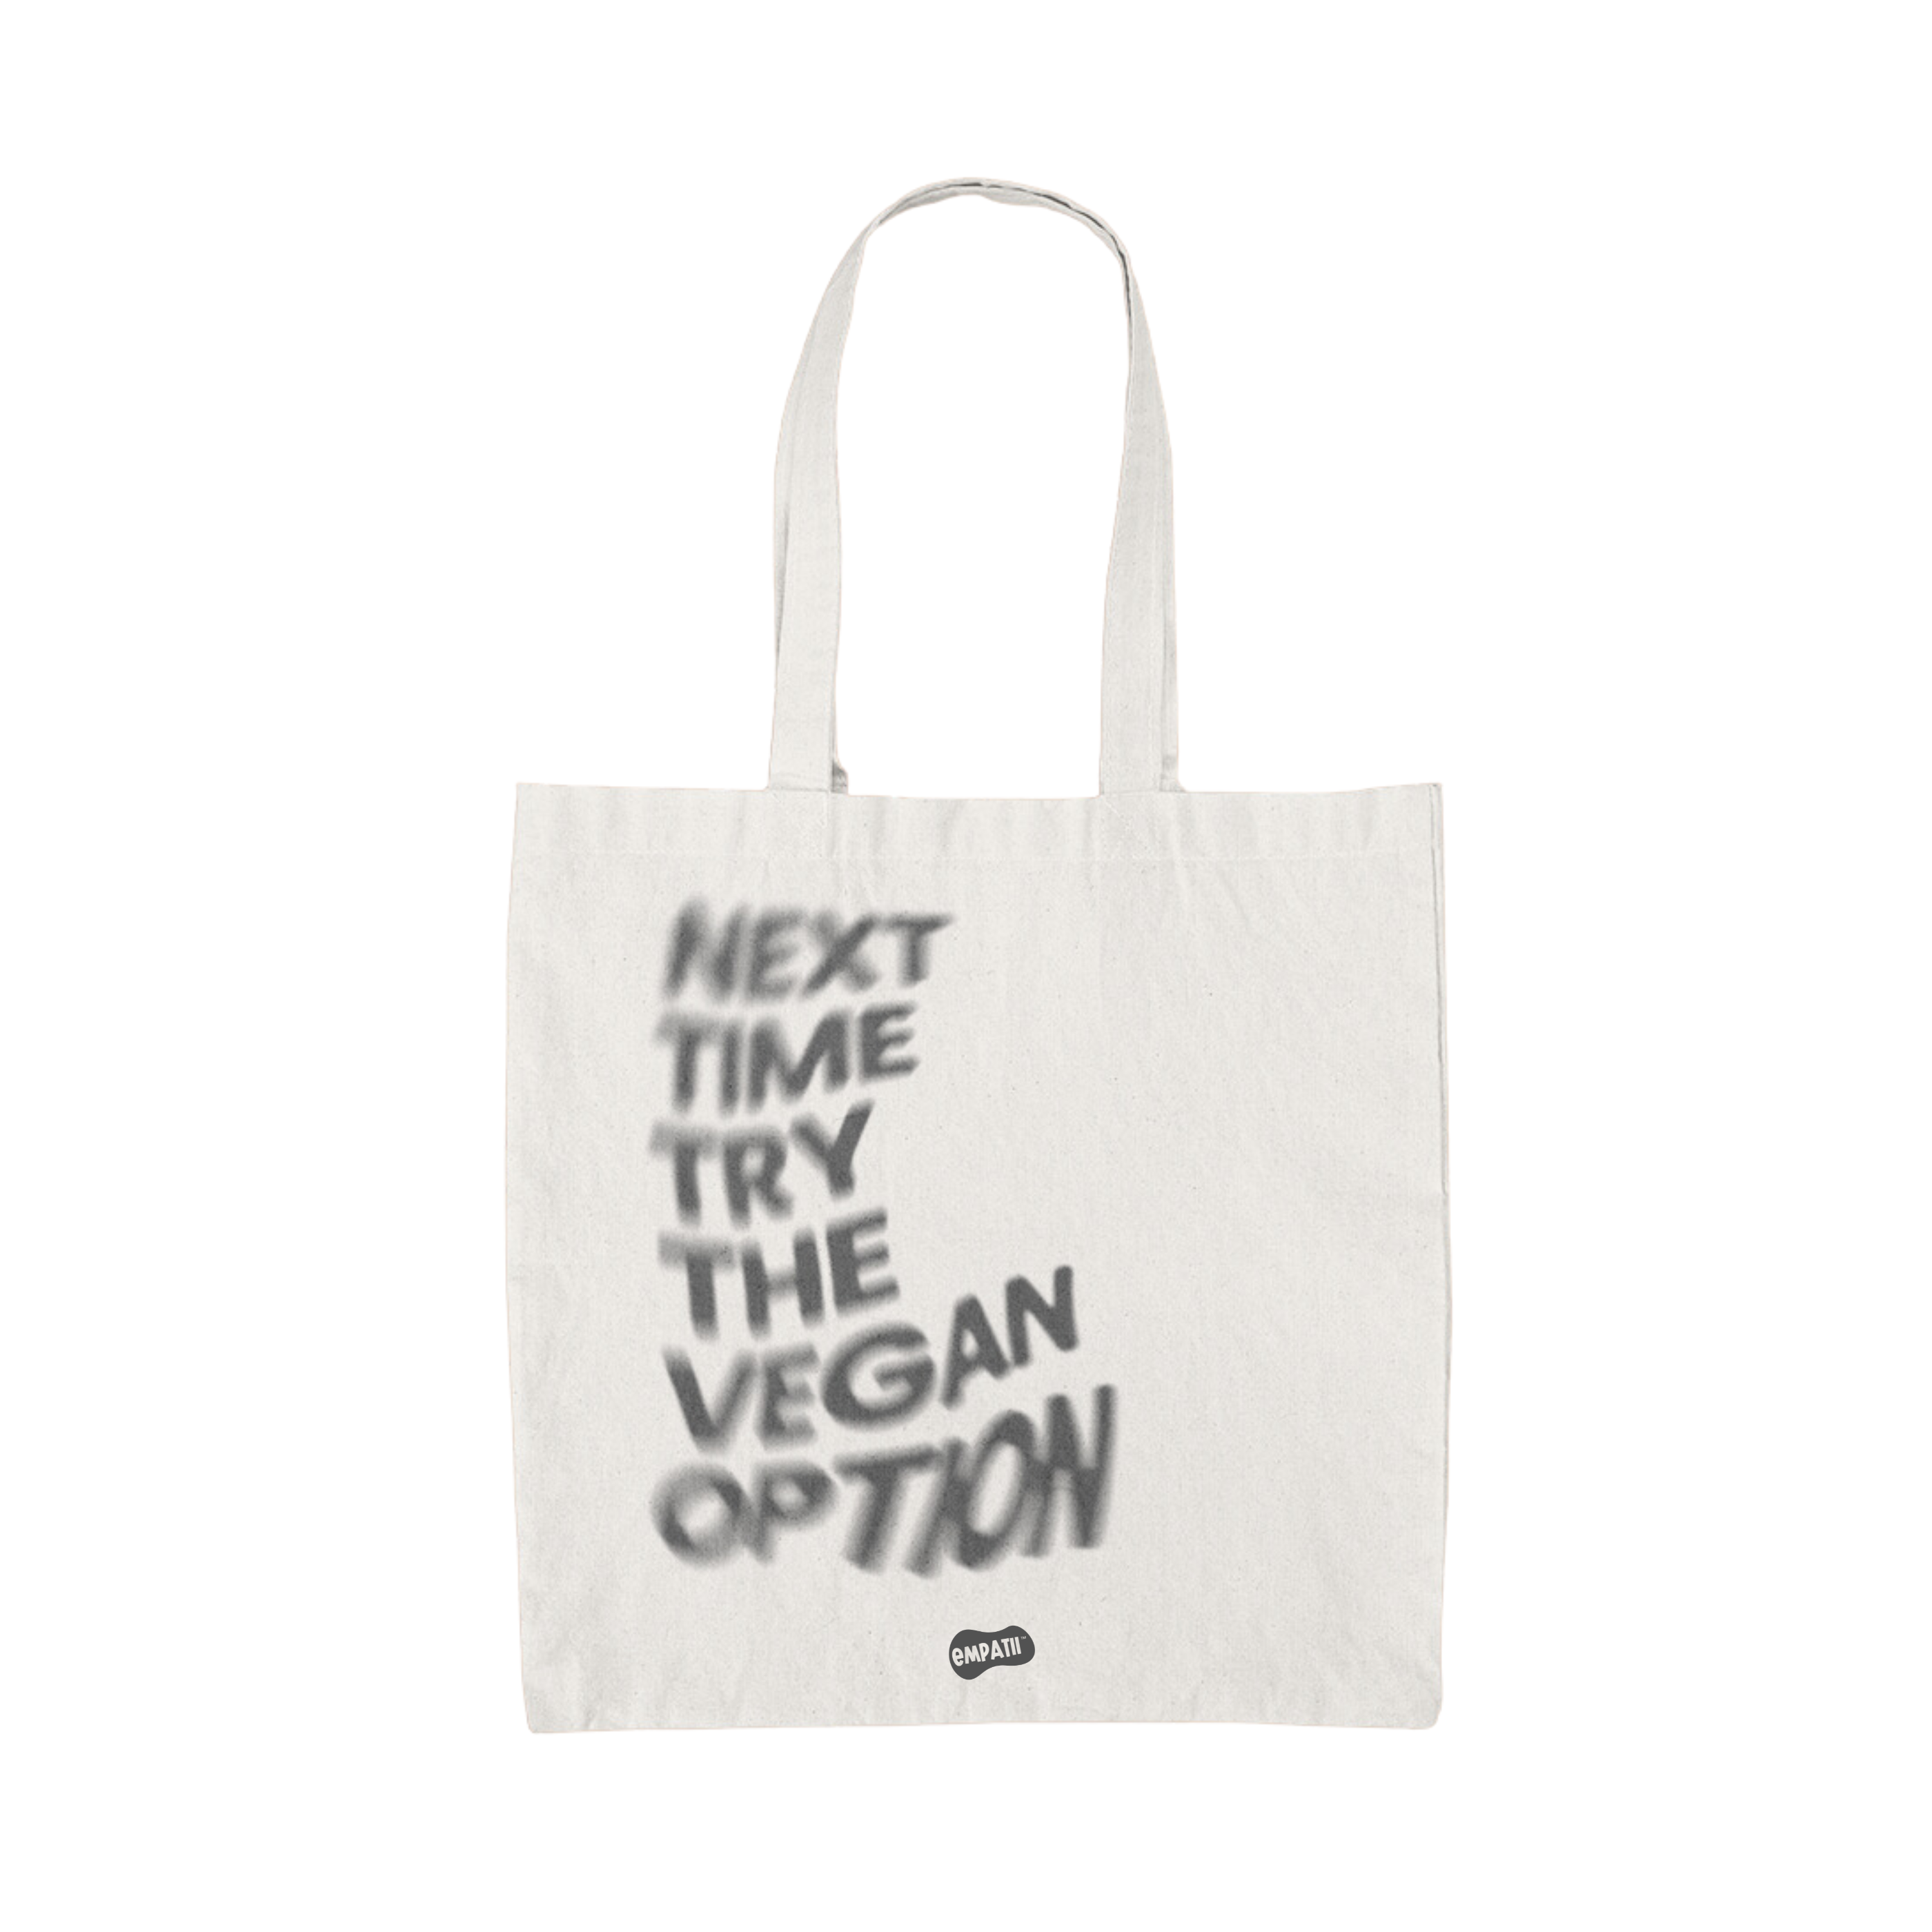 Try The Vegan Option - Large Tote Bag - Empatii